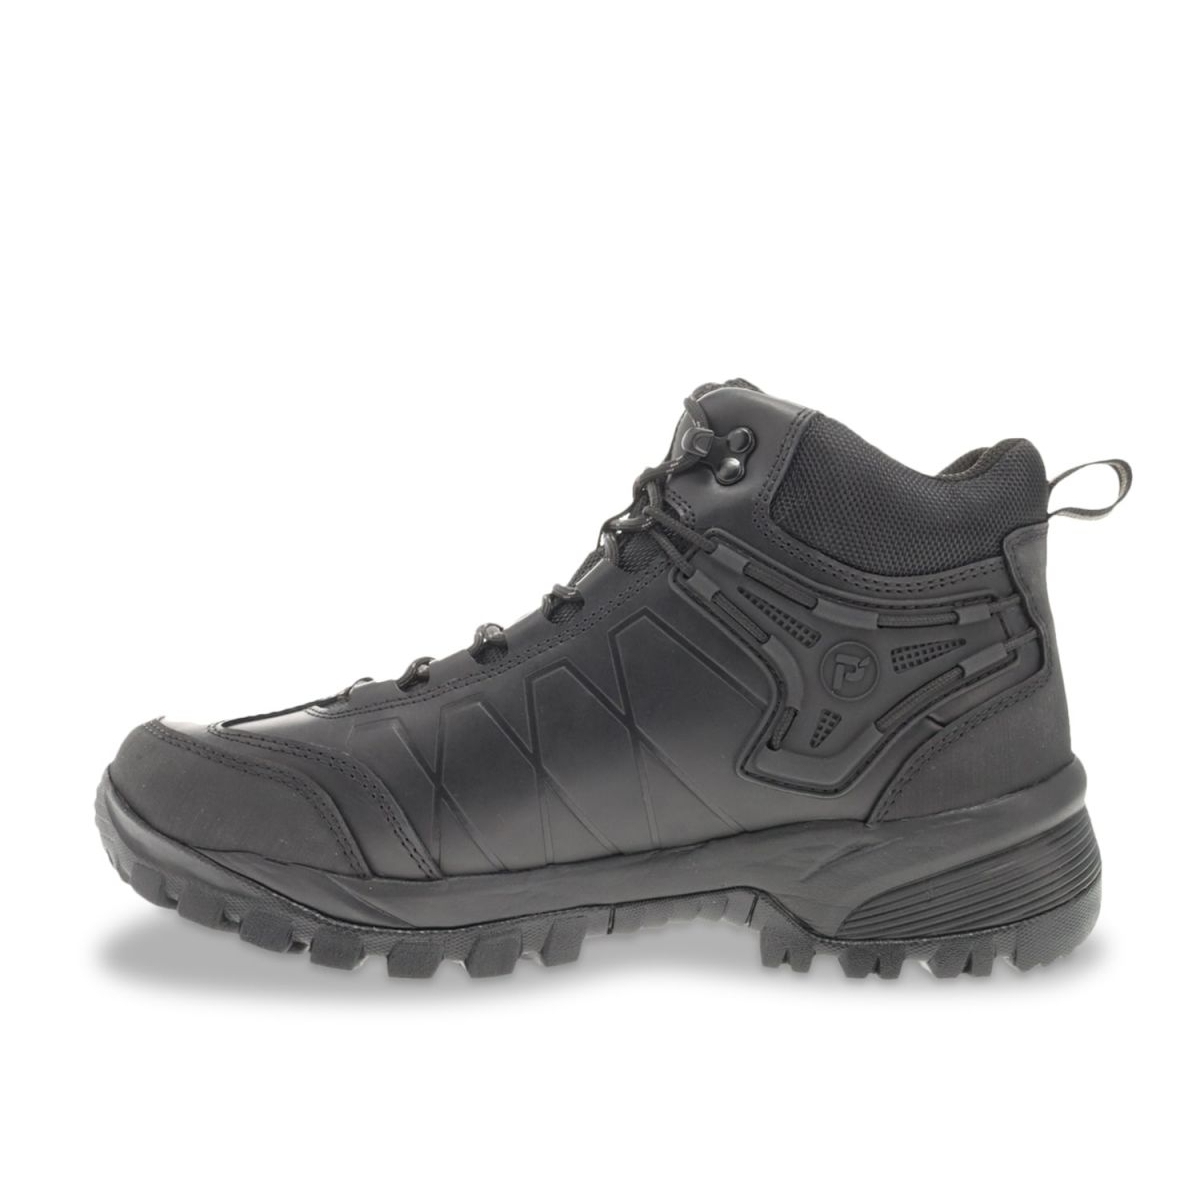 Propet Men's Ridge Walker Force Hiking Boots Black - MBA052LBLK BLACK - BLACK, 10.5 XX-Wide